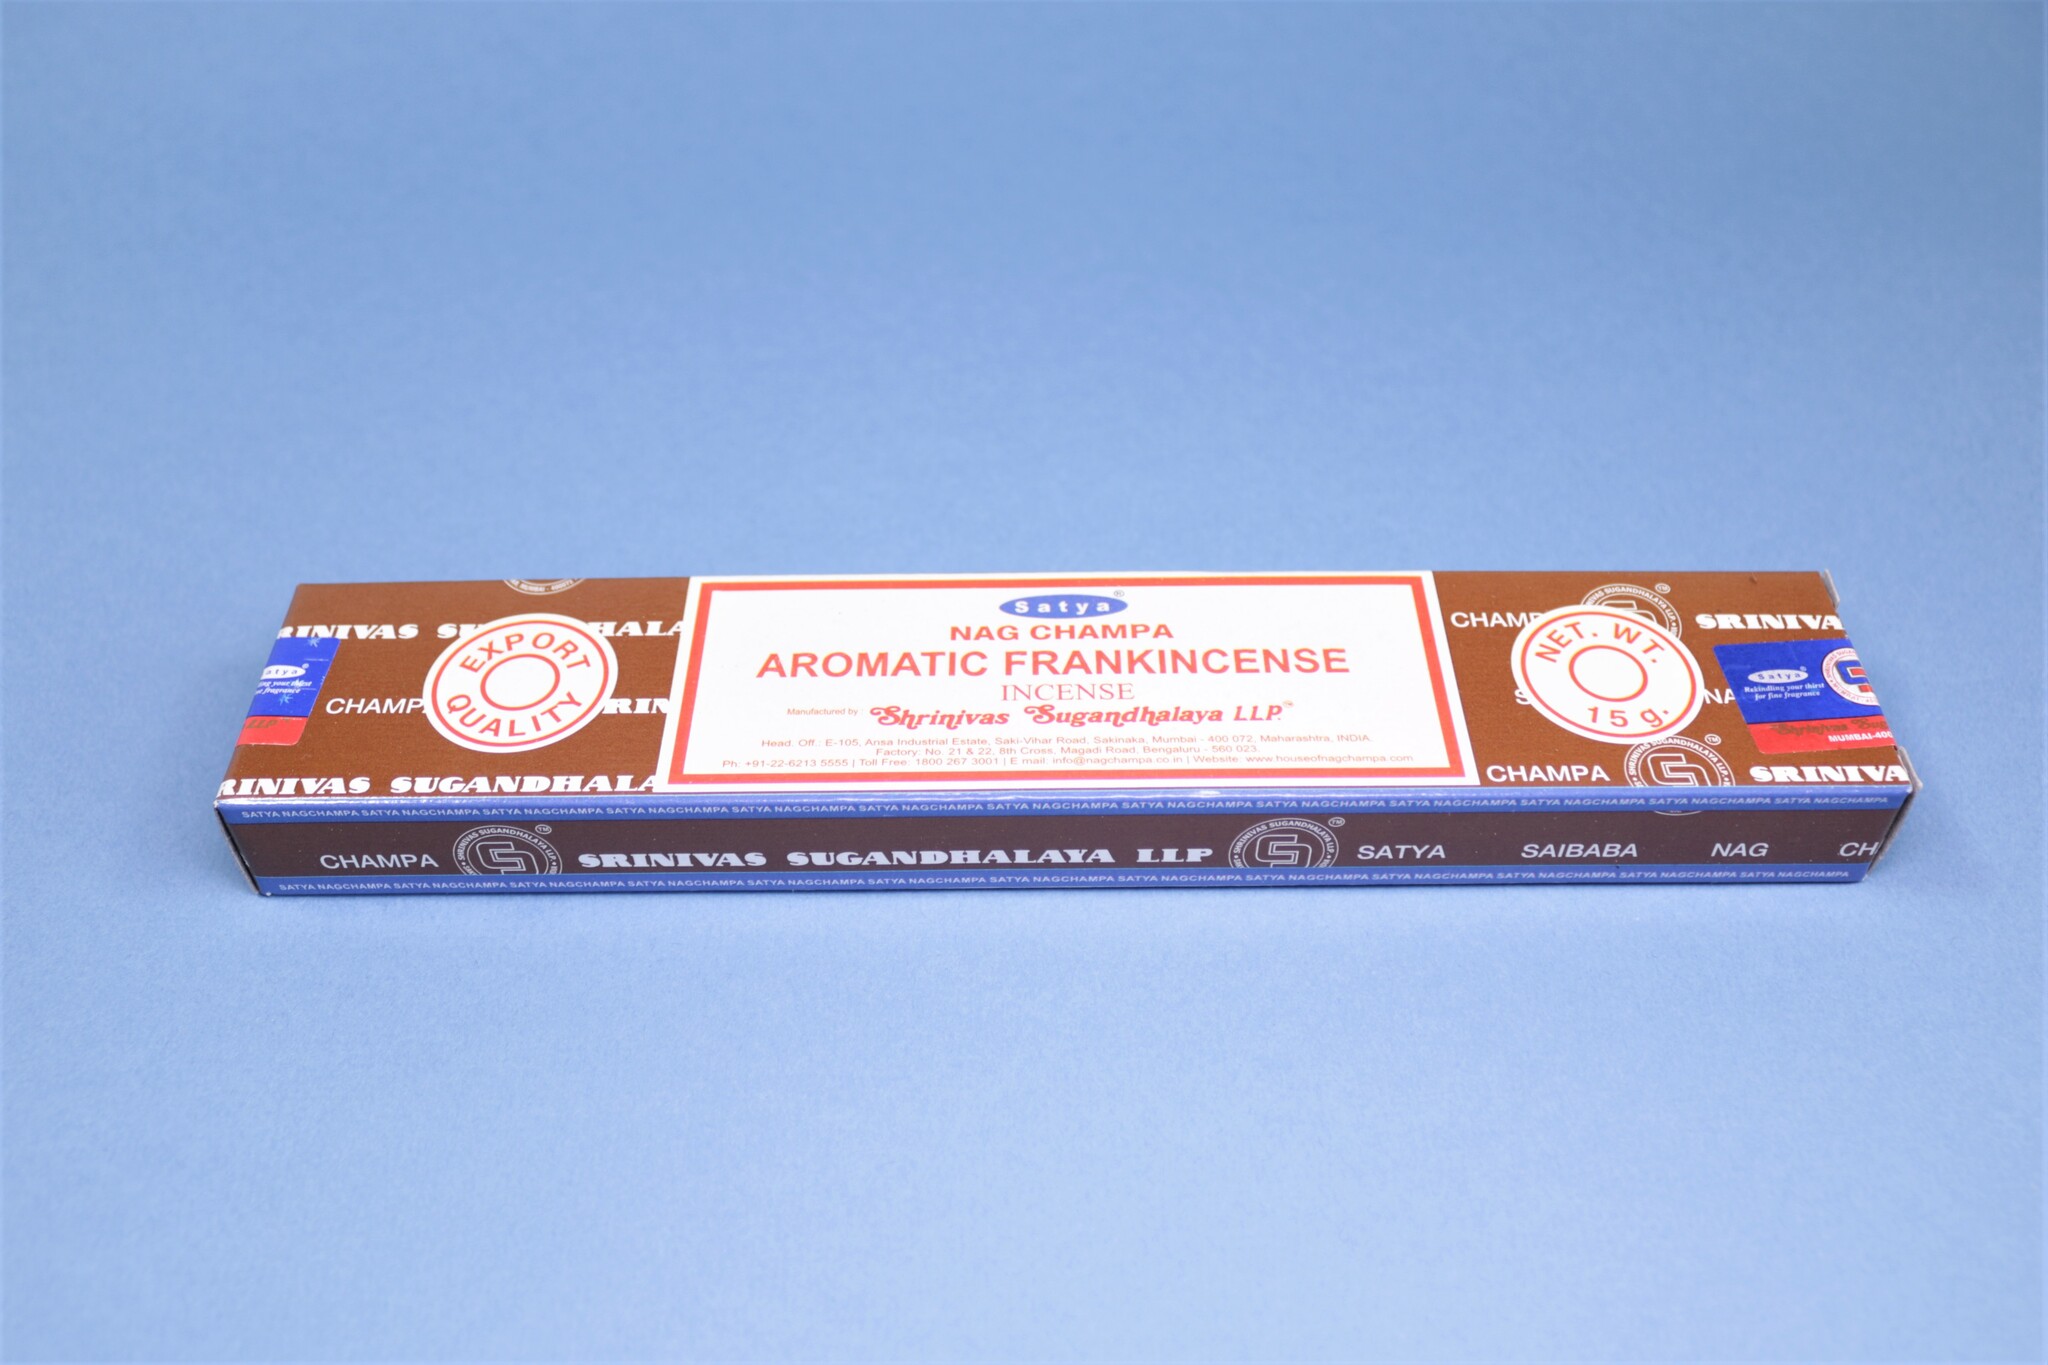 Nag Champa, Aromatic Frankincense